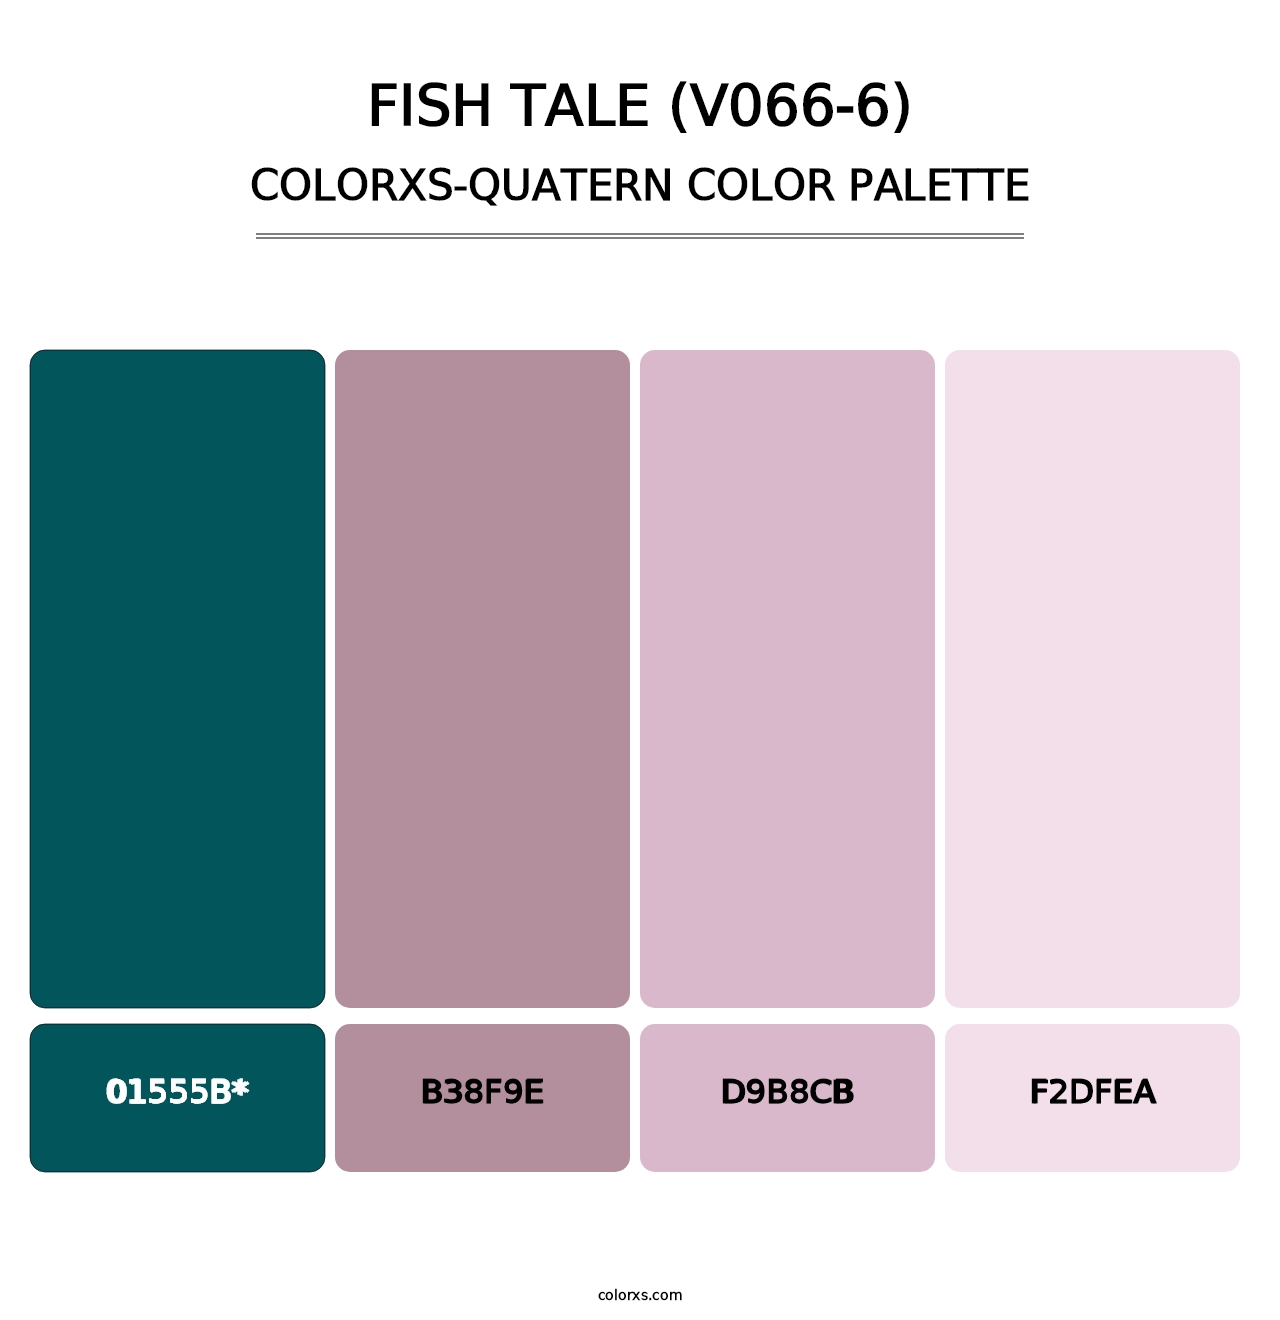 Fish Tale (V066-6) - Colorxs Quatern Palette